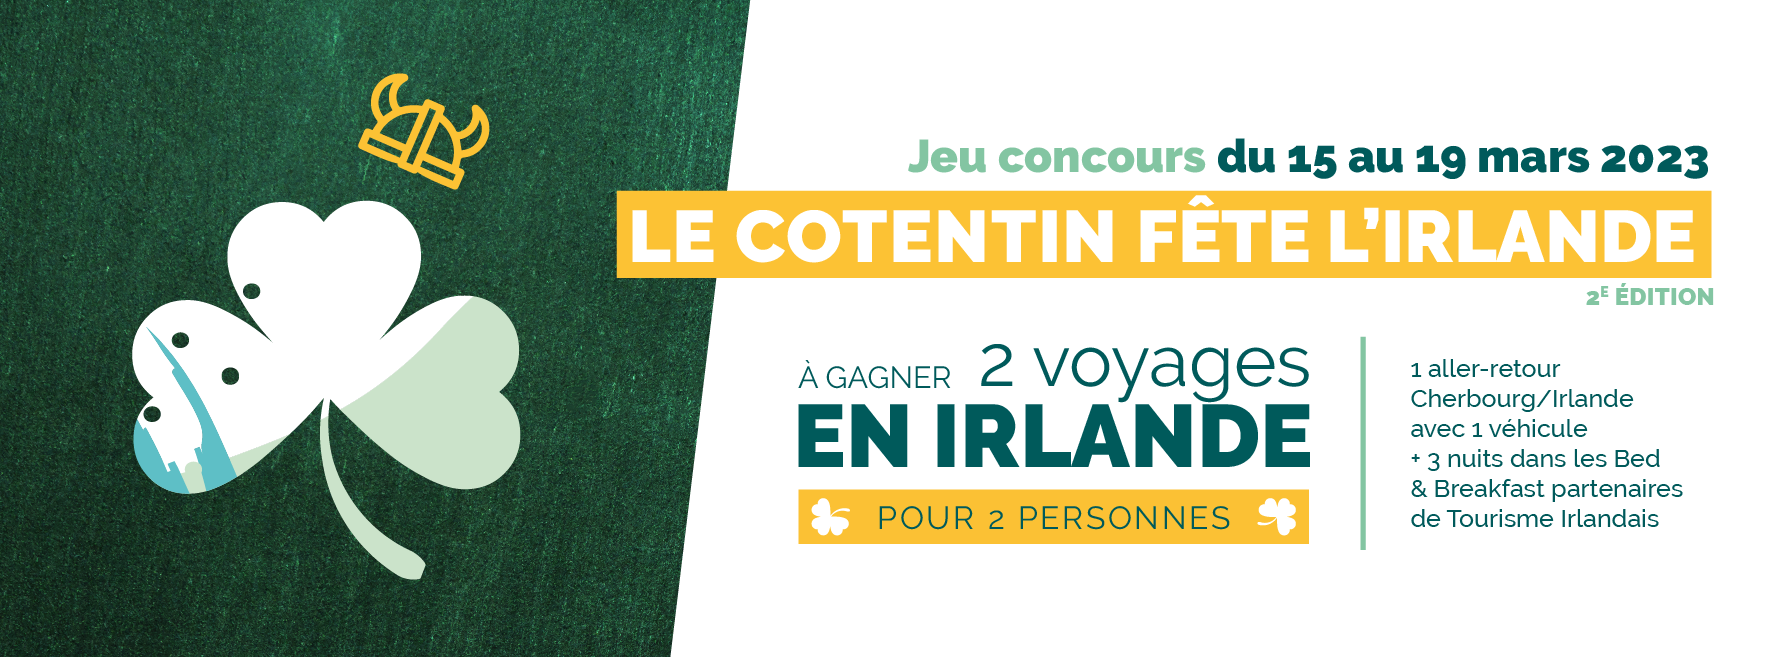 FB_Irlande-Cotentin.png